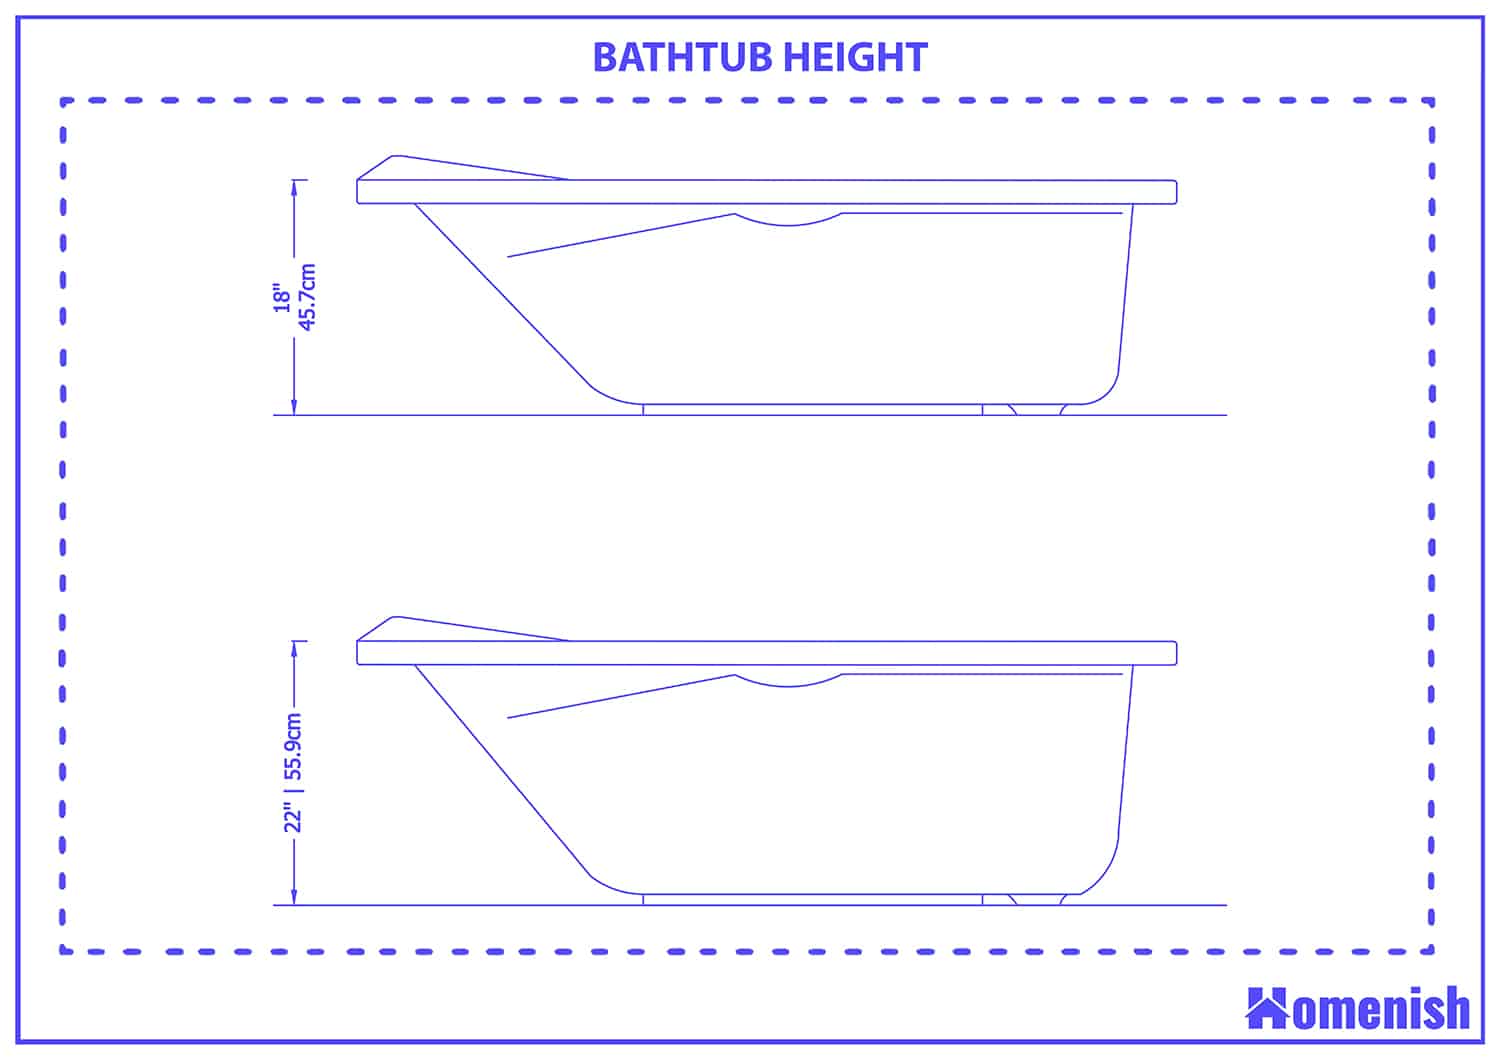 Bathtub height